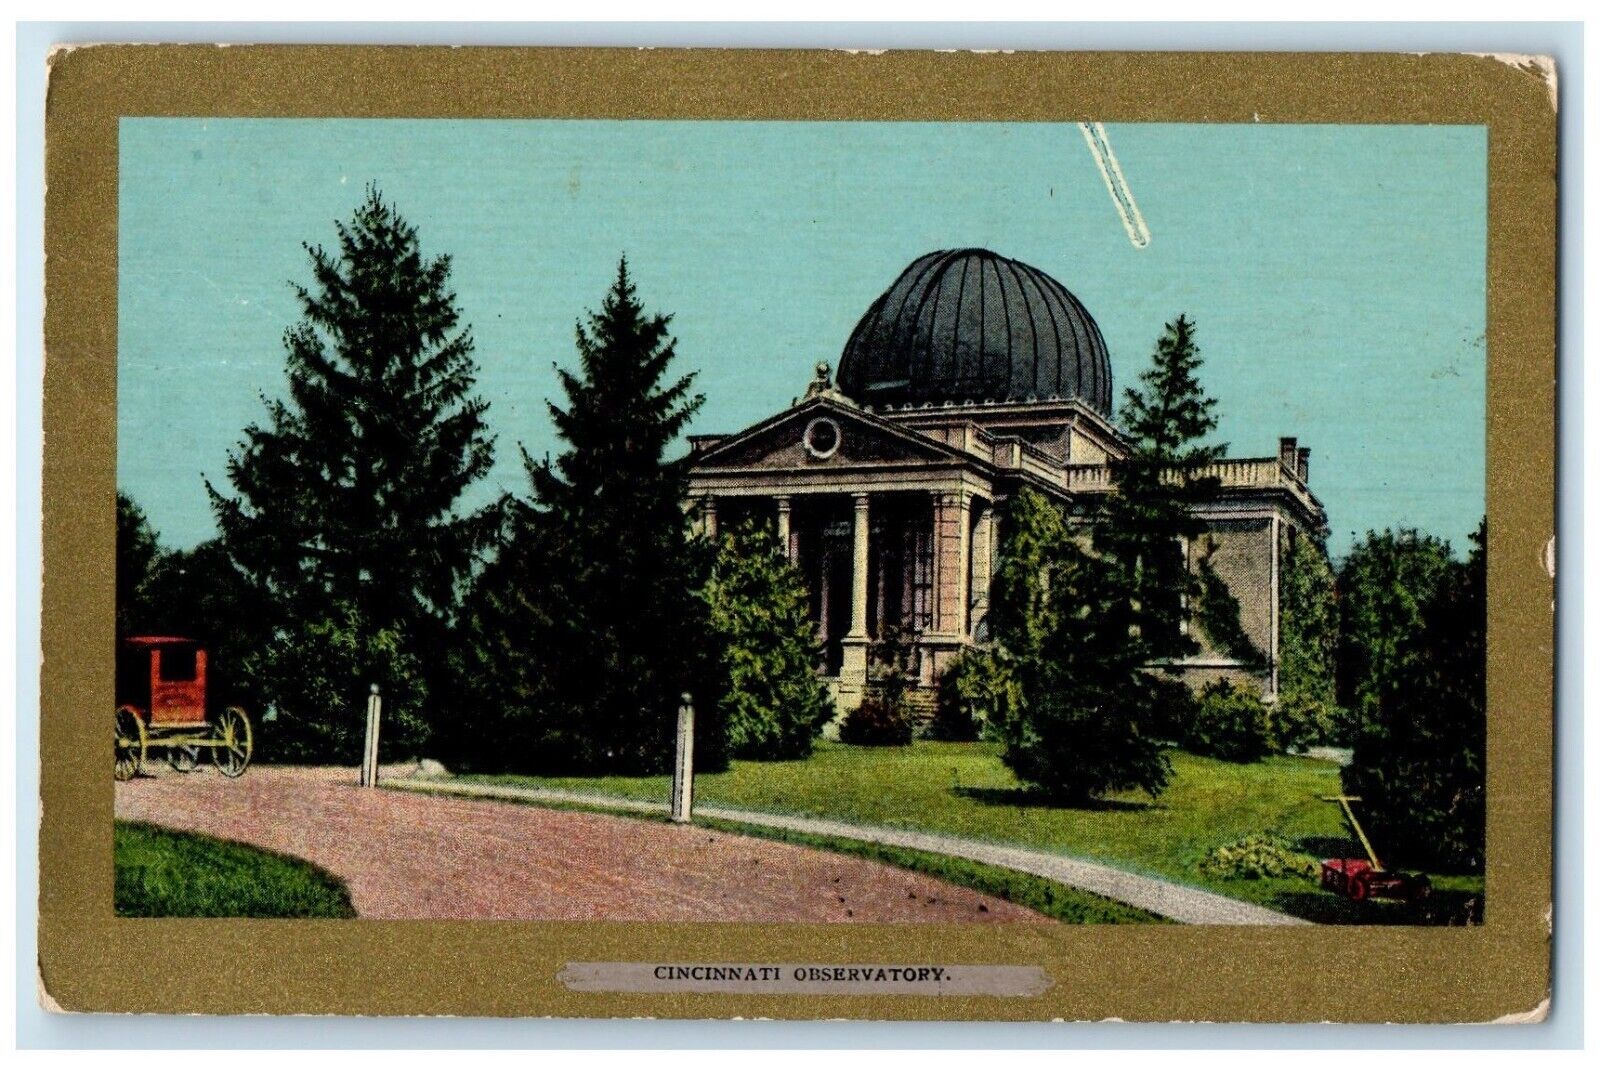 1905 Exterior Building Cincinnati Observatory Cincinnati Ohio Vintage Postcard